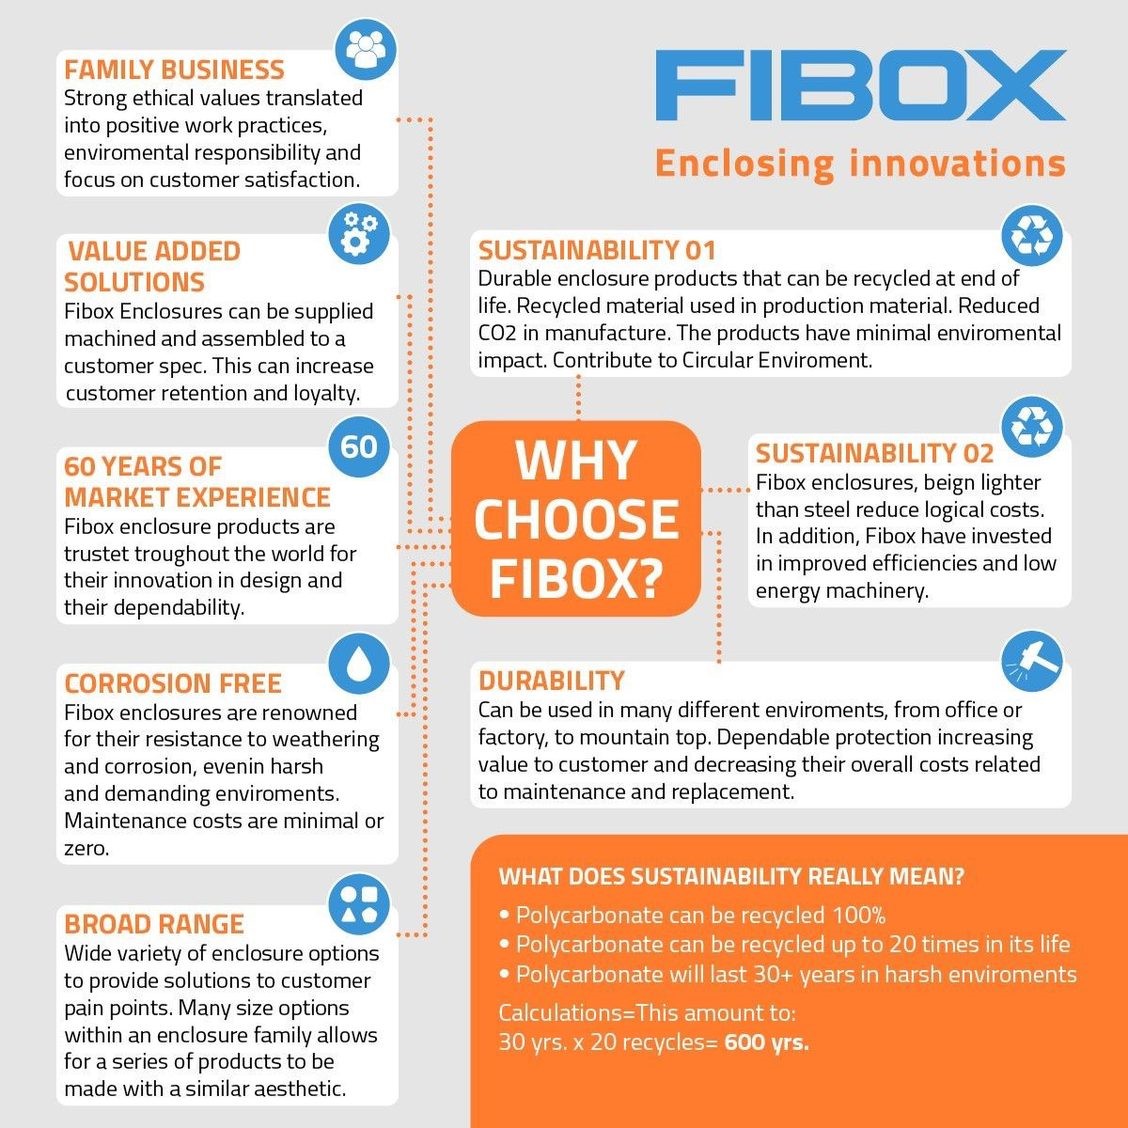 Why Fibox